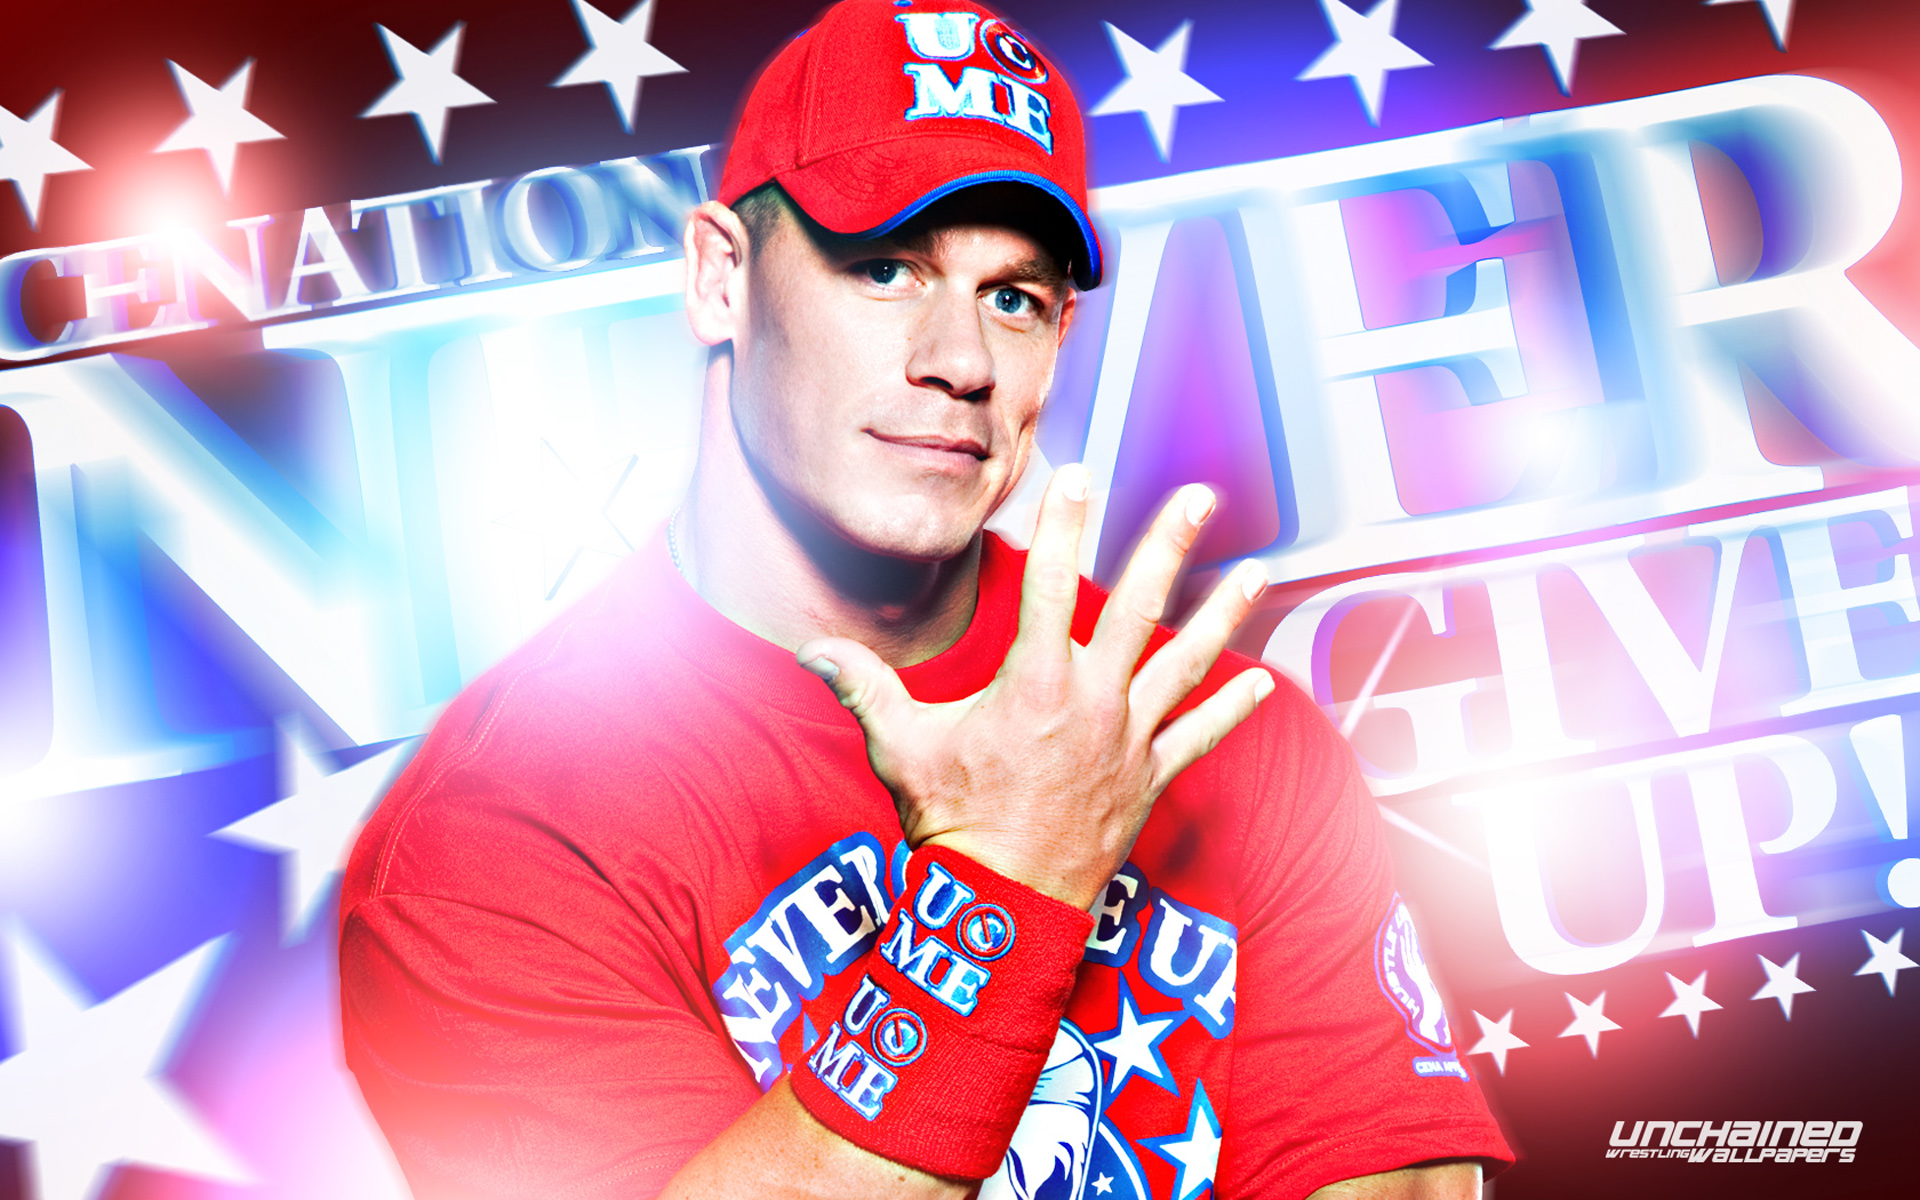 John Cena Free Hd Wallpaper Download Latest Images